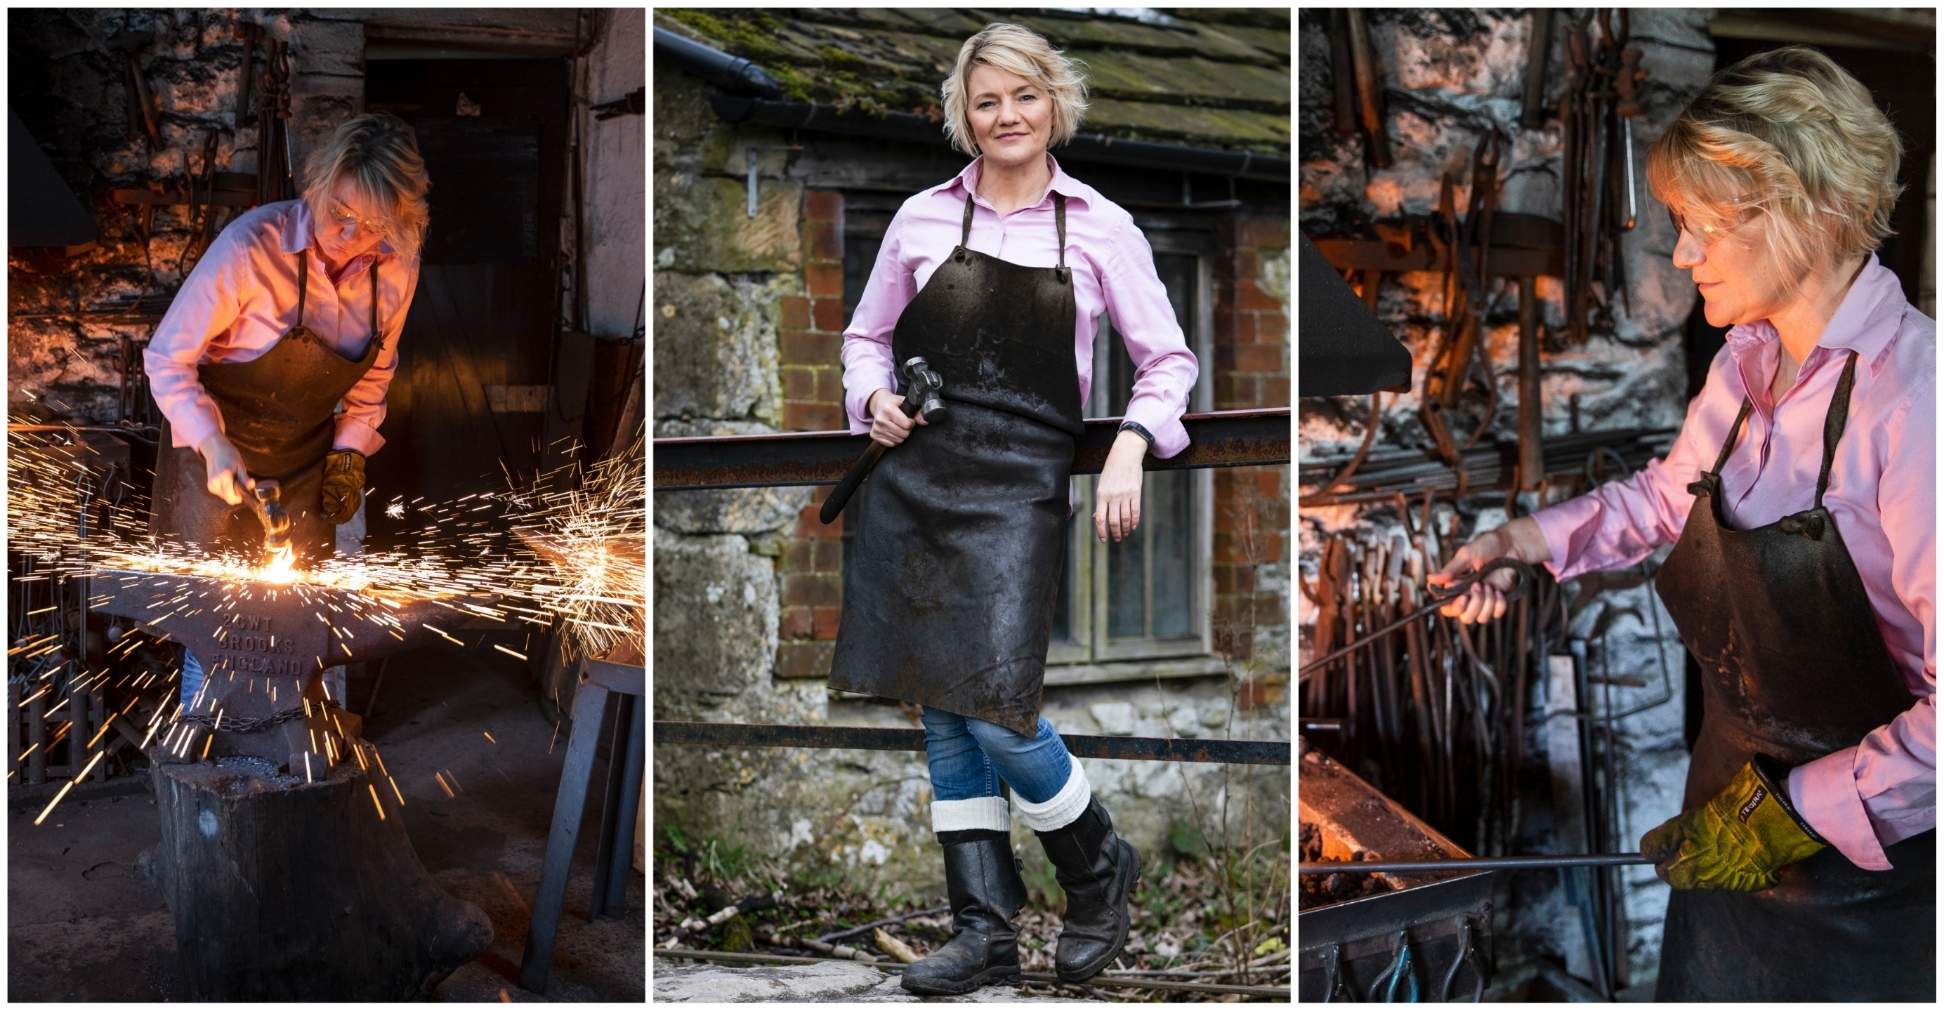 Annabelle Bradley, Blacksmith at the Malham Smithy. Photograph by Clinton Lofthouse